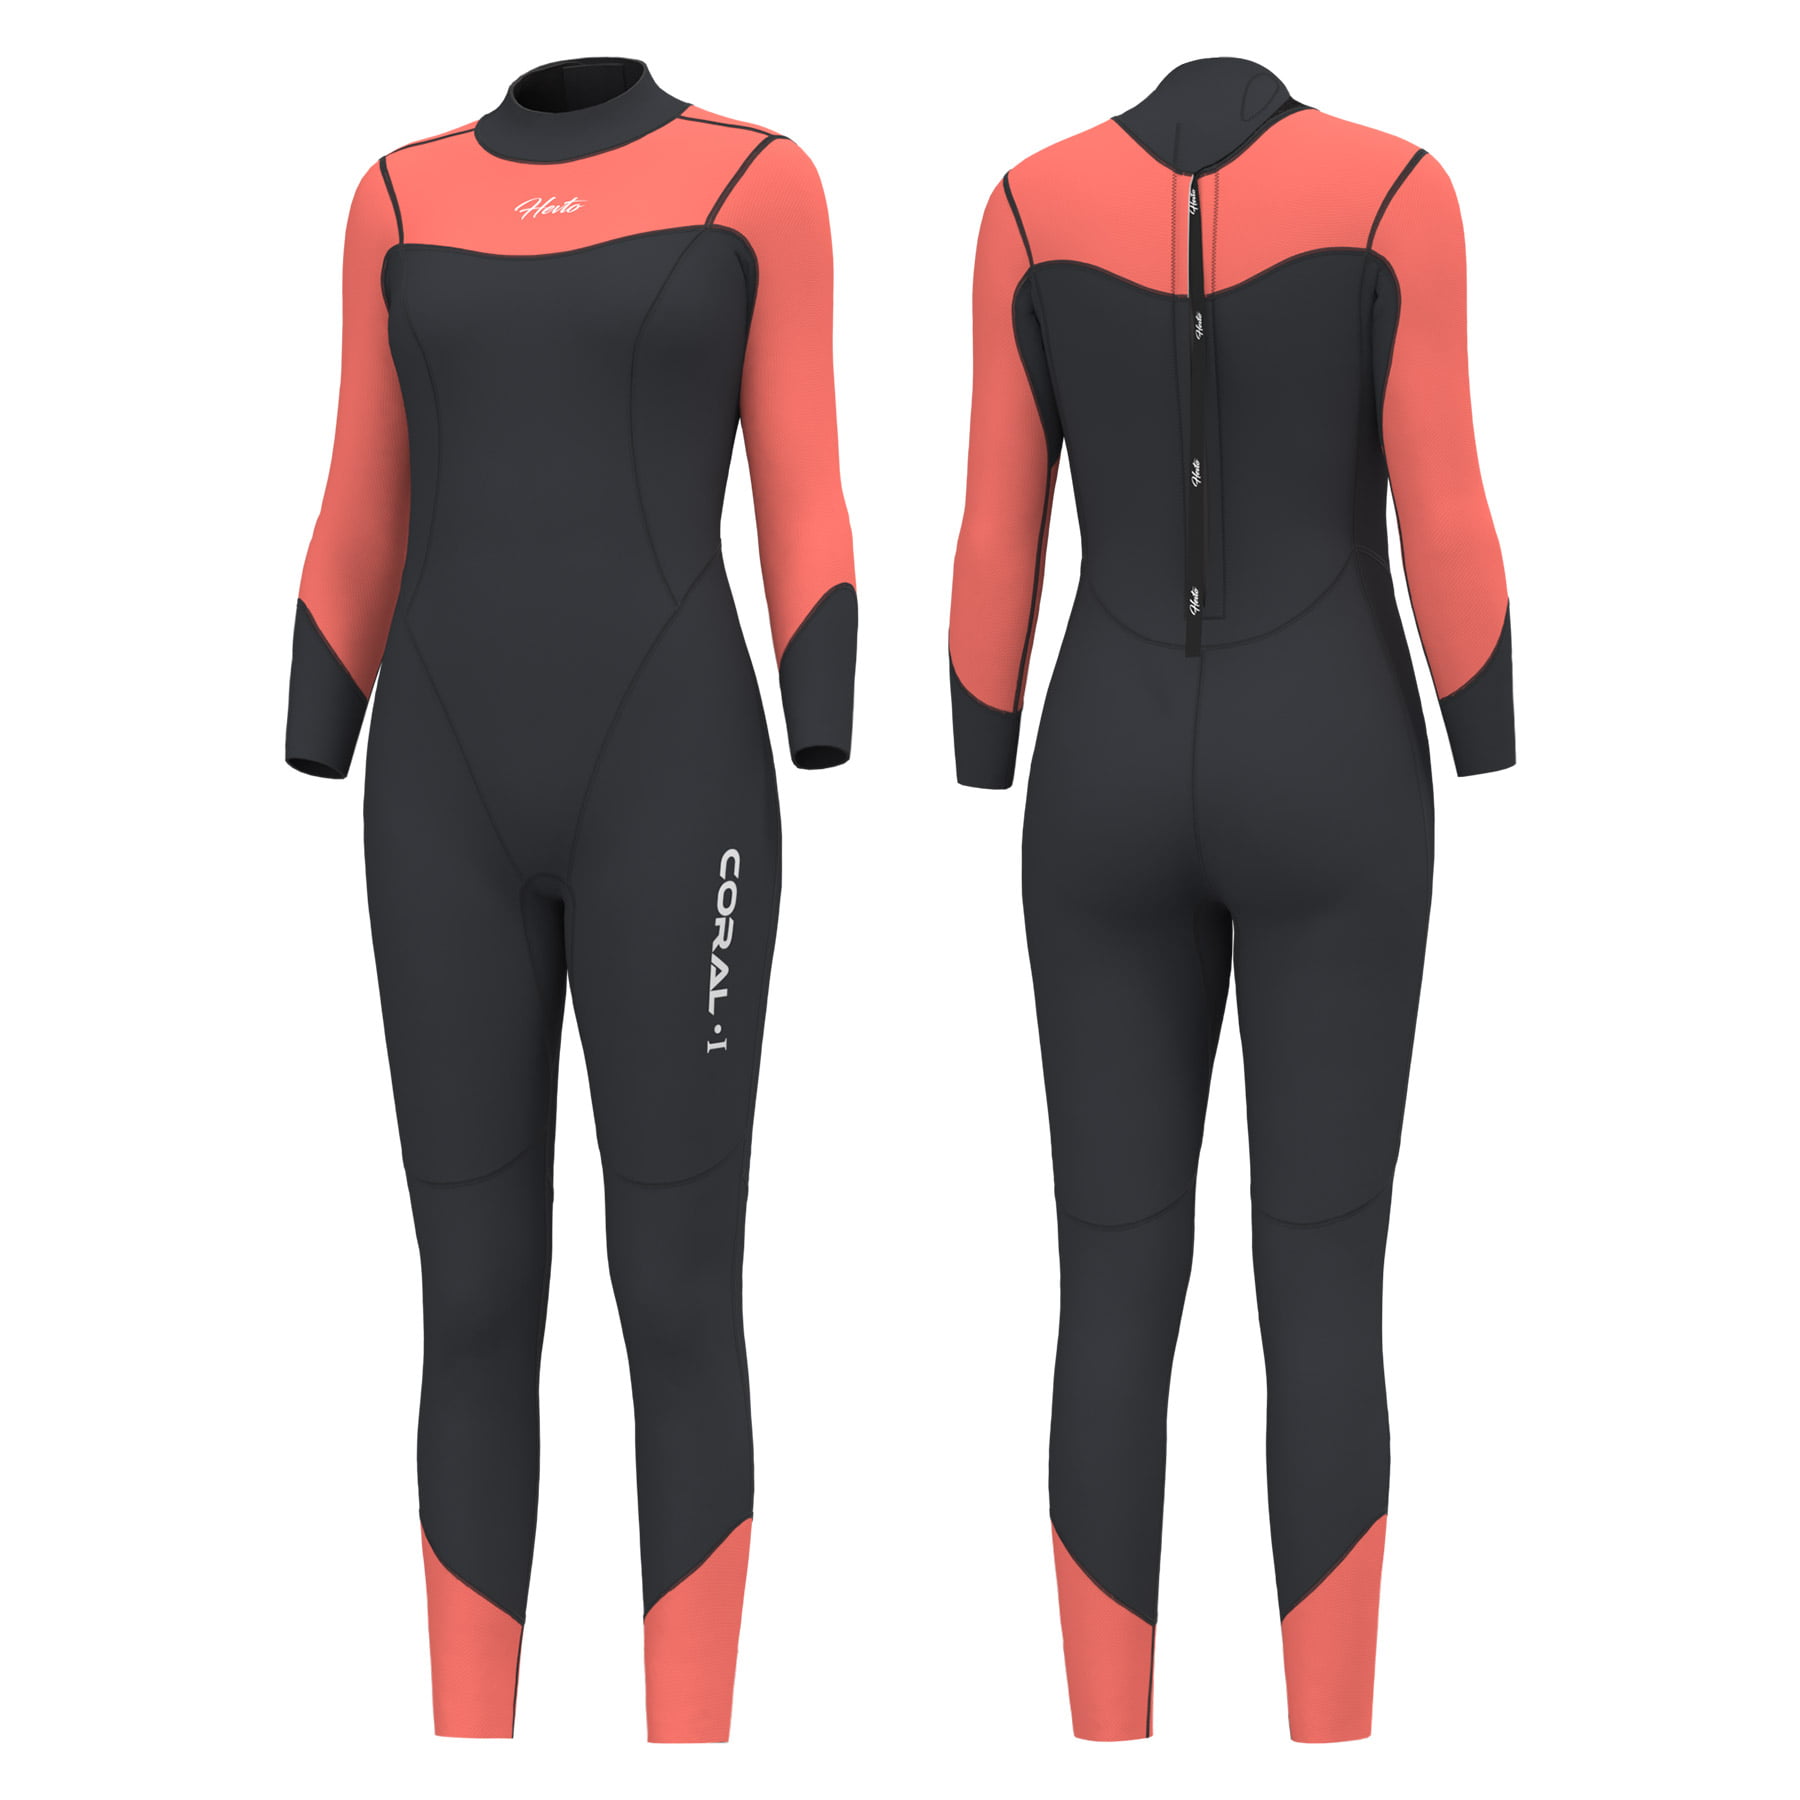 Hevto Wetsuits Women 3mm Neoprene Full Diving Suits Surfing Swimming ...